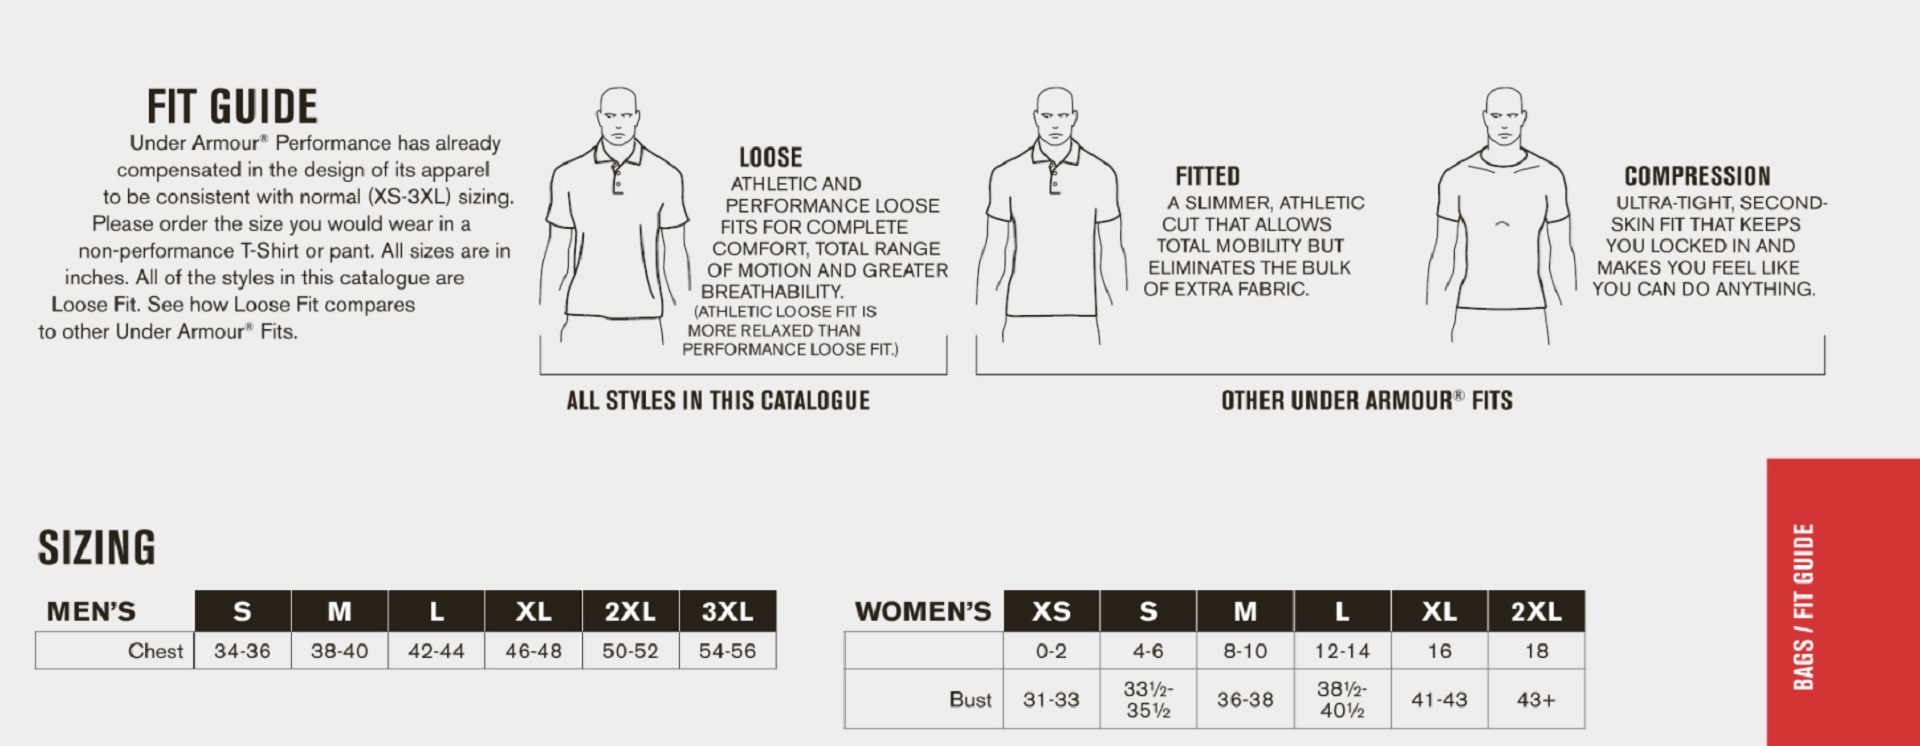 Under Armor Women S Size Chart